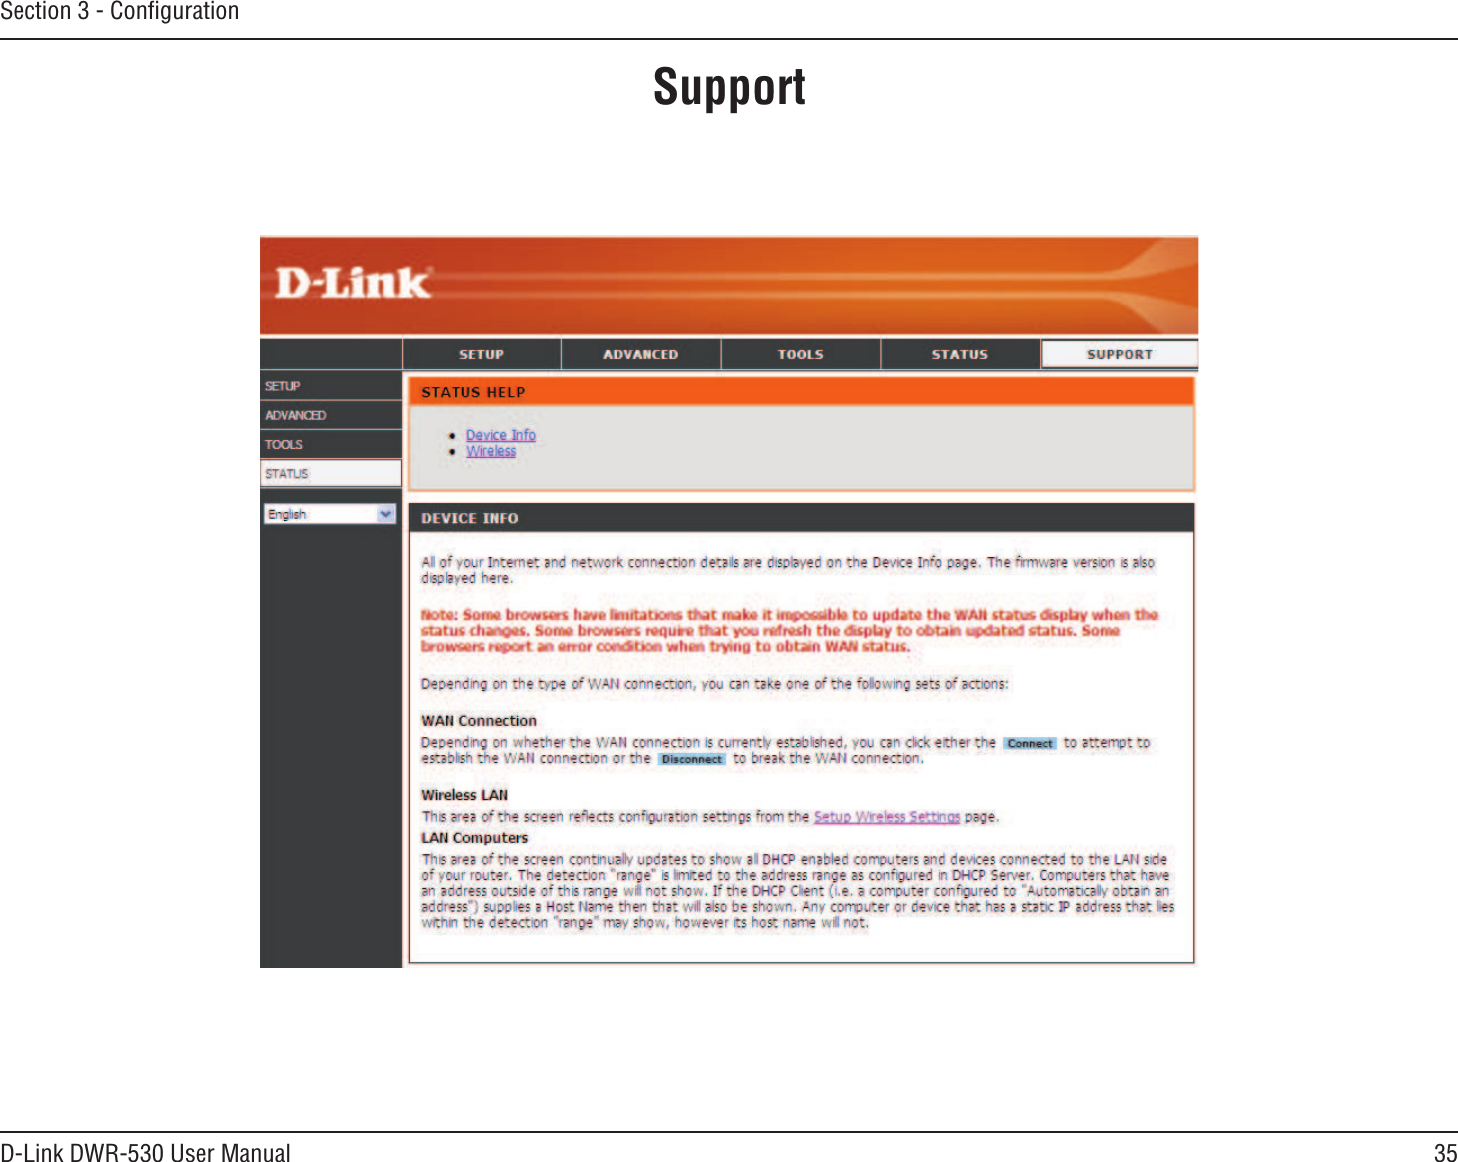 35D-Link DWR-530 User ManualSection 3 - ConﬁgurationSupport